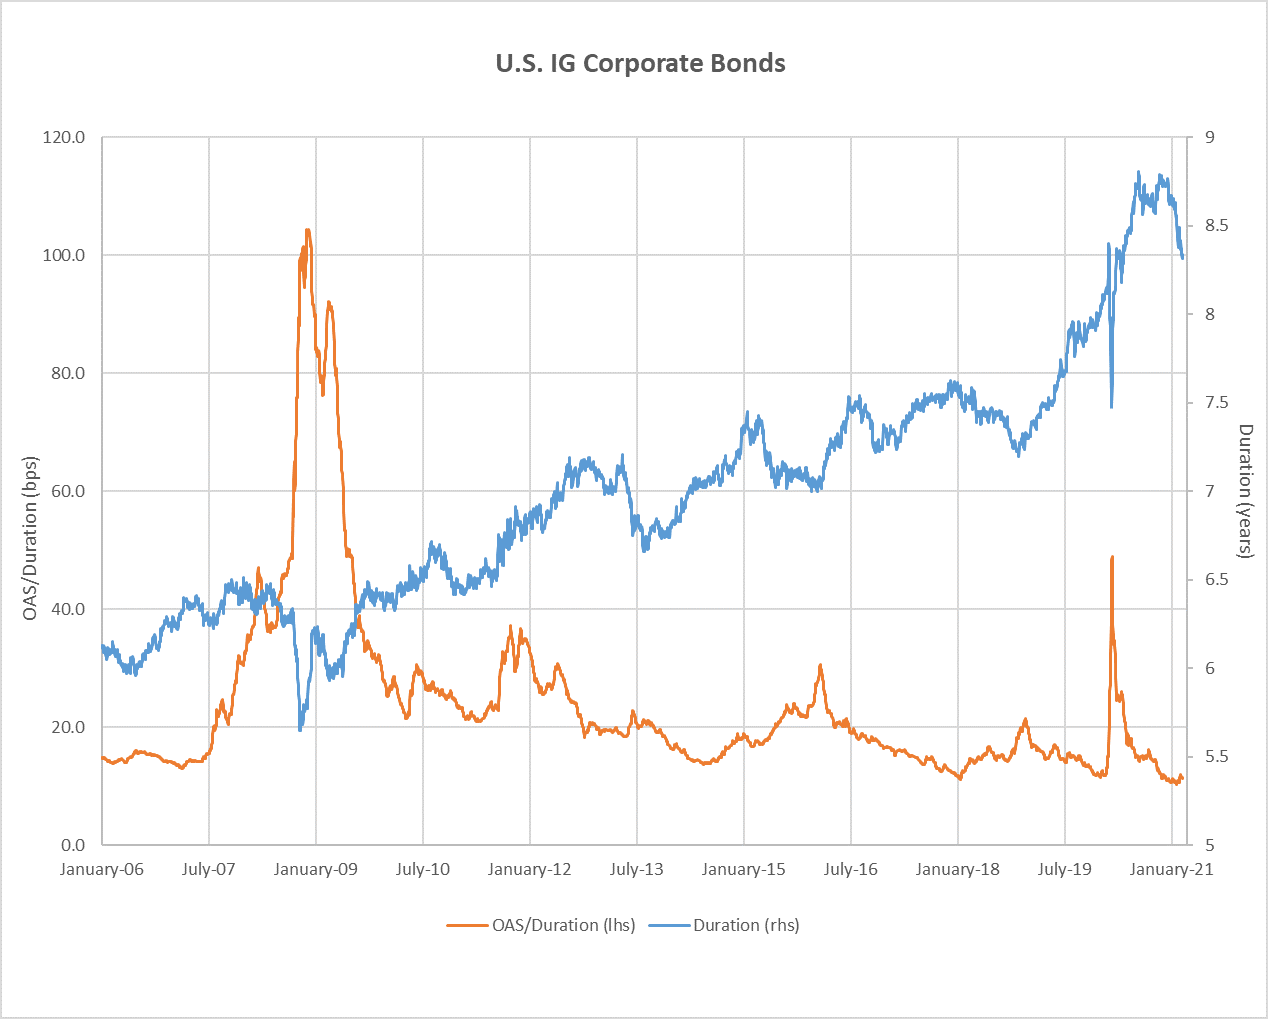 Source: Bloomberg Barclays U.S. Corporate Bond Index